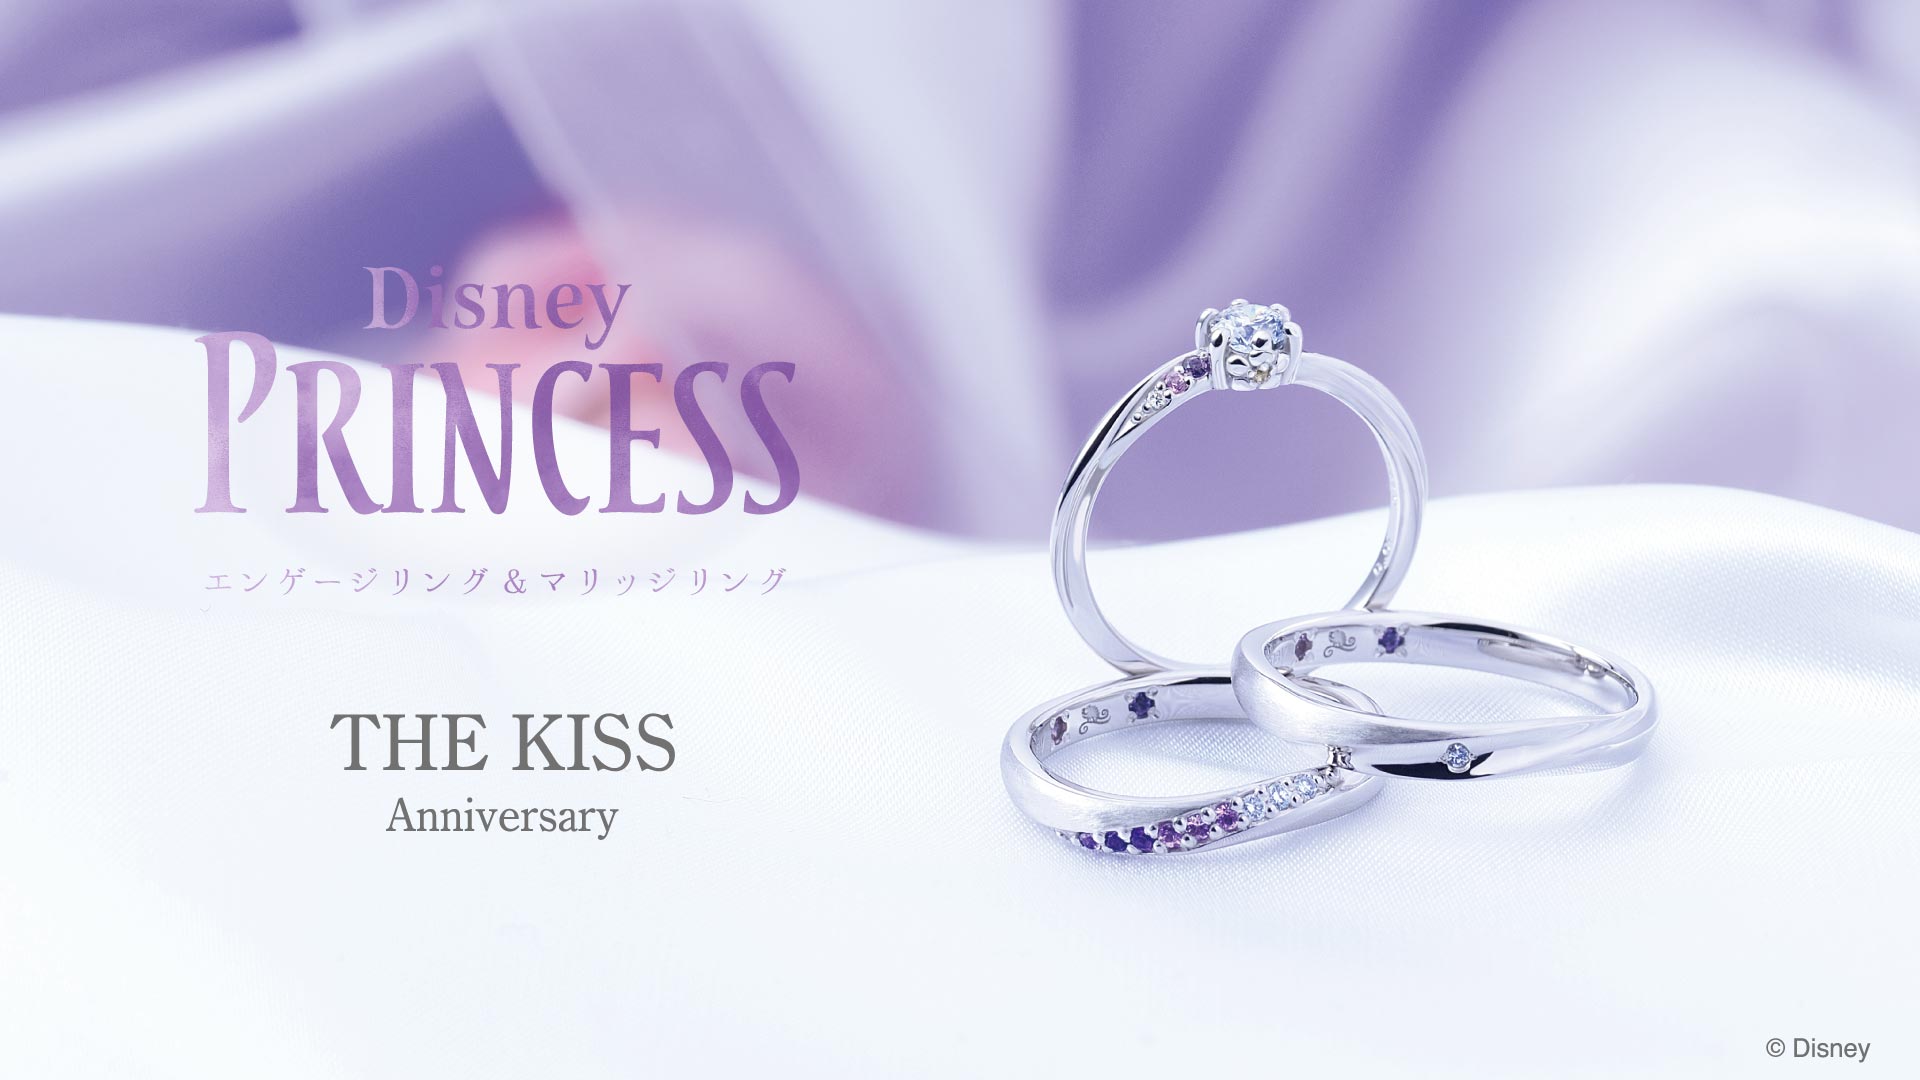 10/16iyjsTHE KISS AnniversarytvcF uC_O